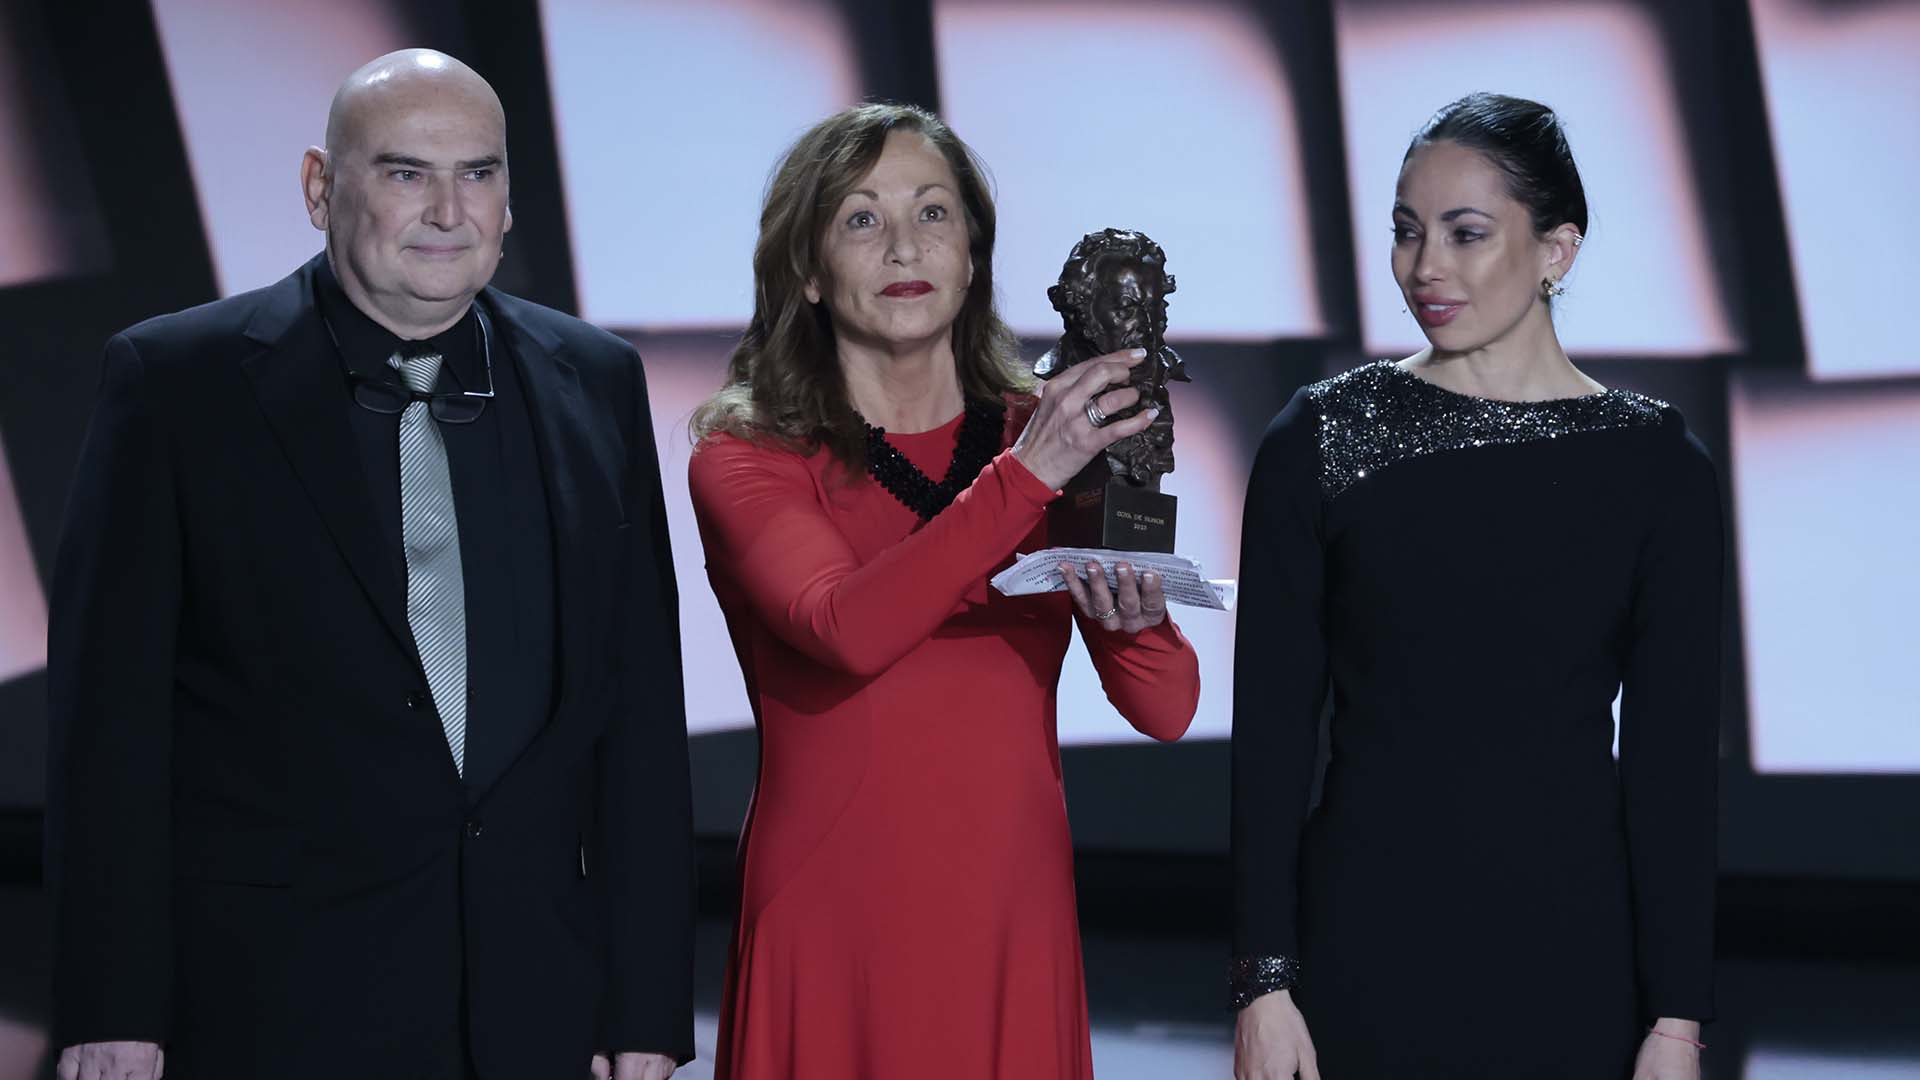 Carlos Saura tribute during the 37th annual Goya Film Awards in Sevilla on Saturday 11 February, 2023.DE LA 37 EDICION DE LOS PREMIOS GOYA 2023